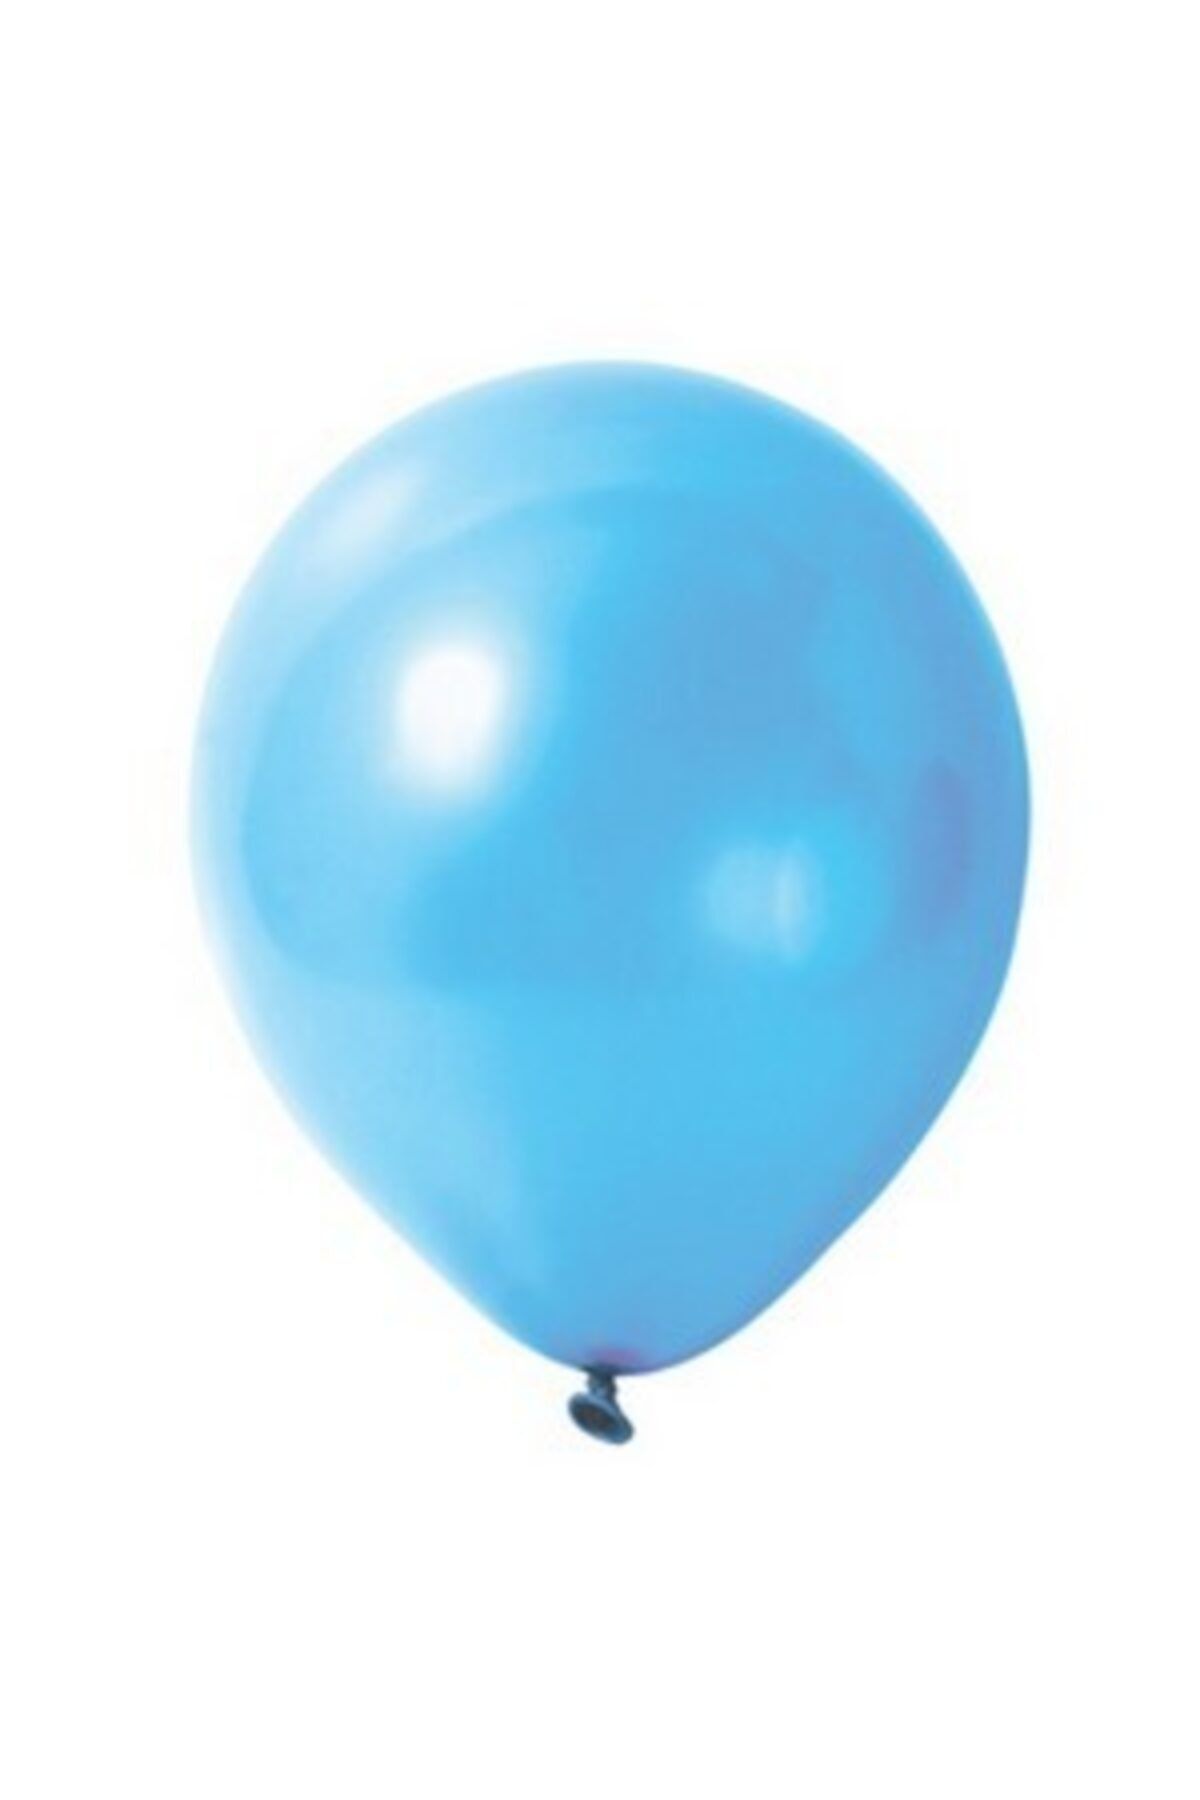 araget Metalik Latex Balon Mavi Renk 10 Adet